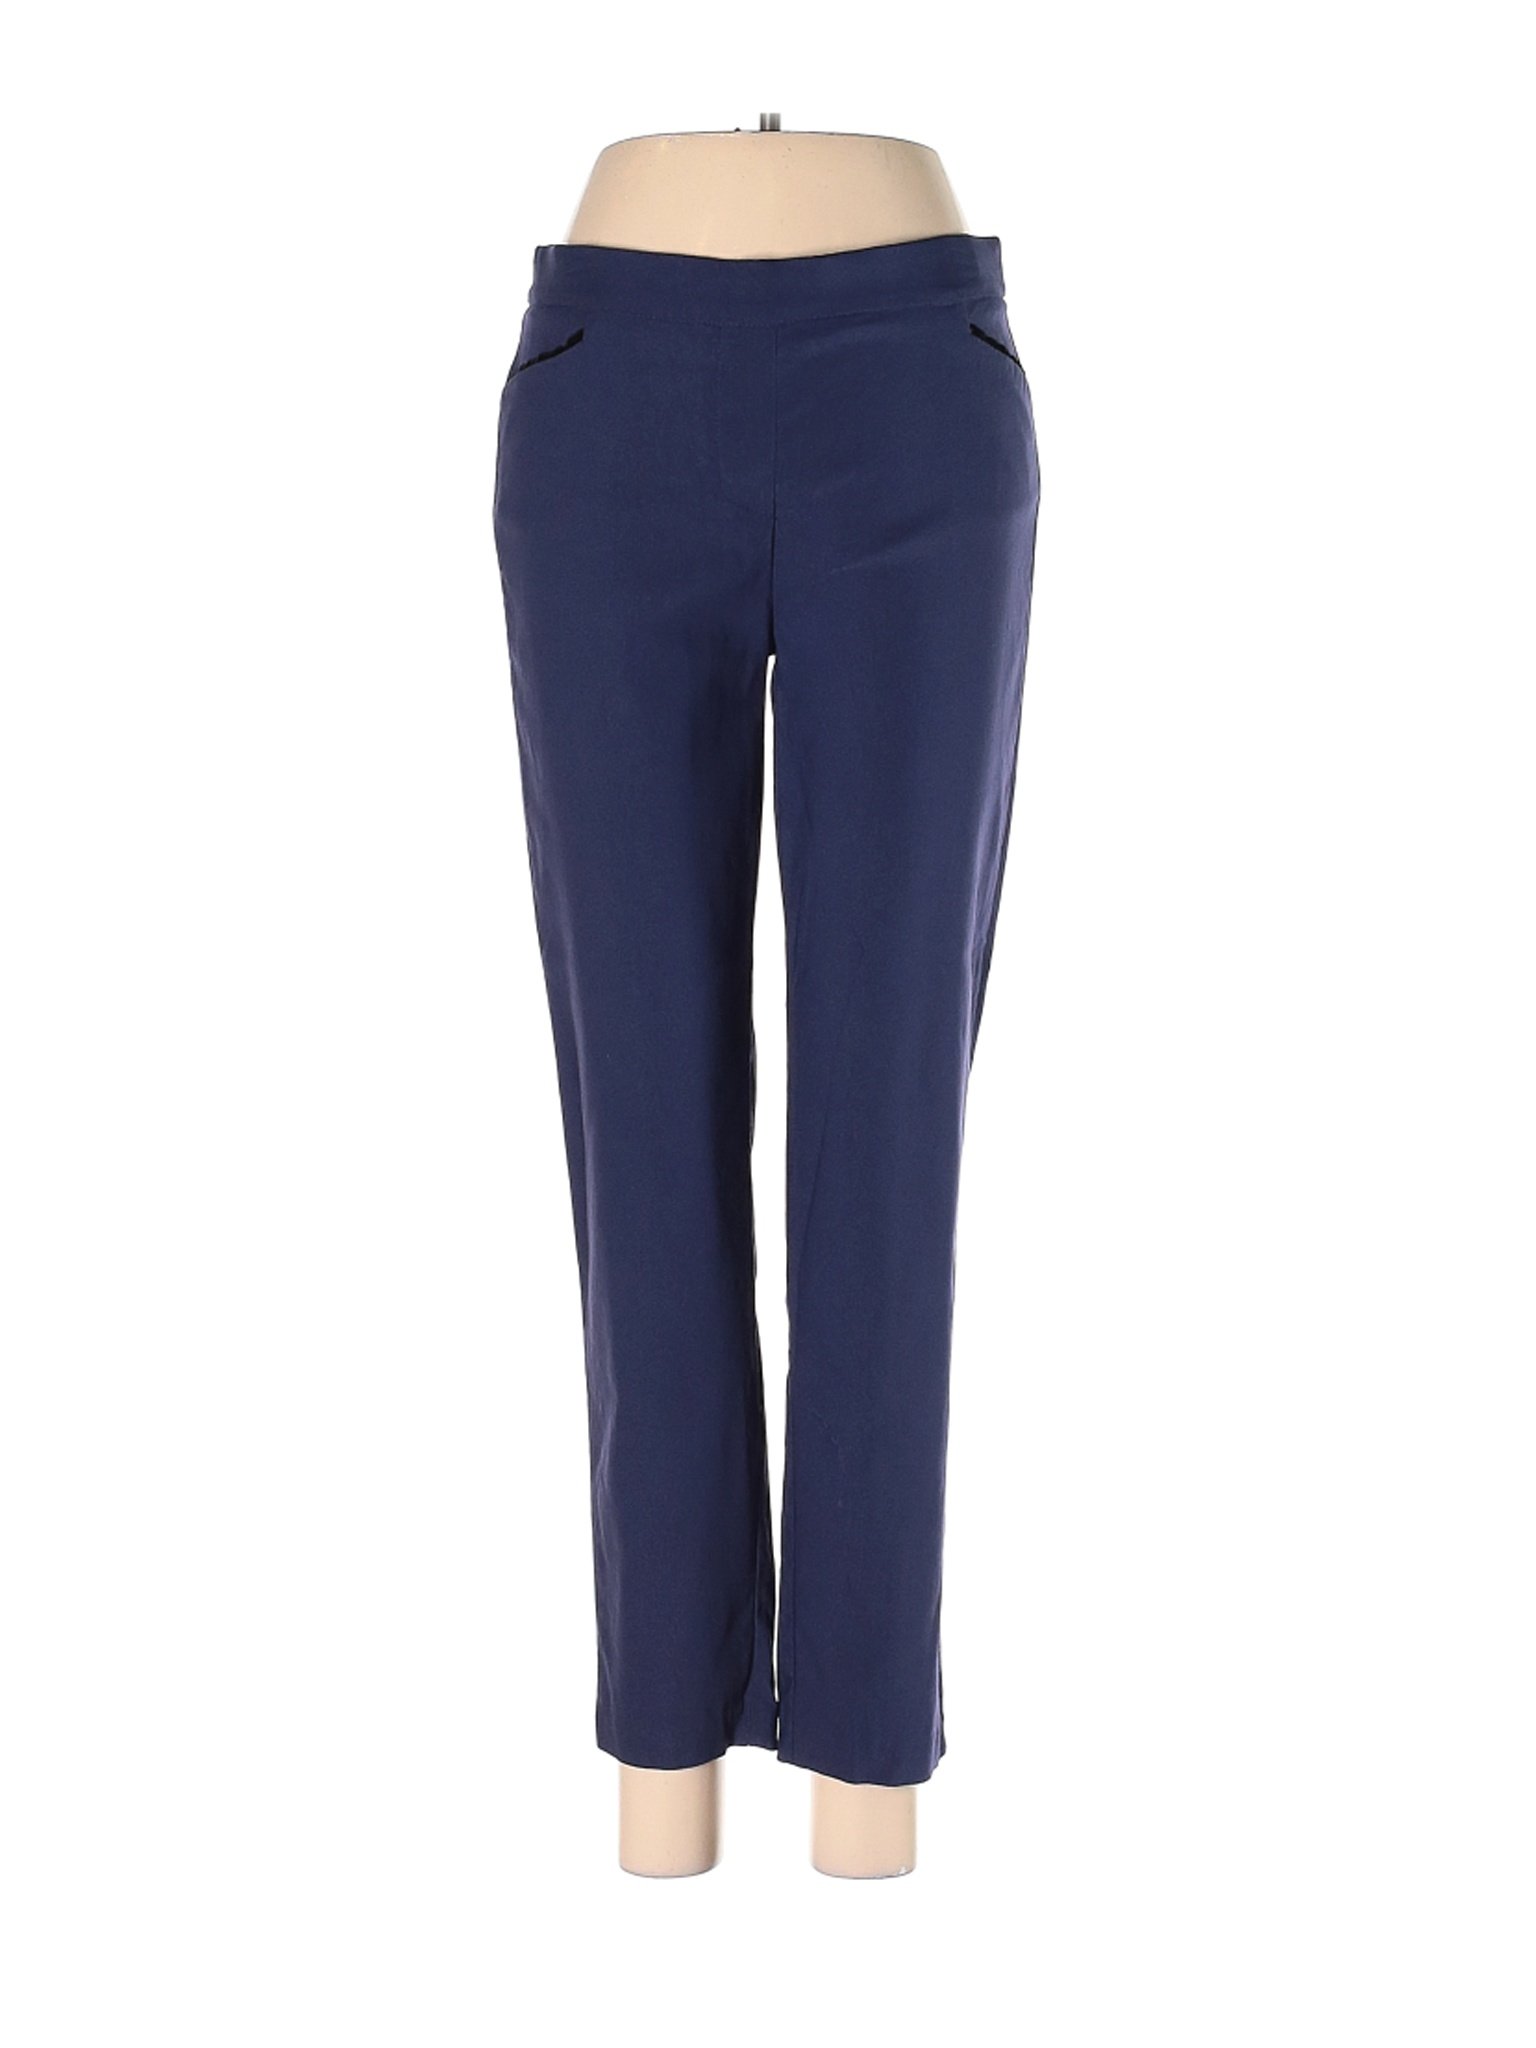 Retrology Women Blue Casual Pants S | eBay